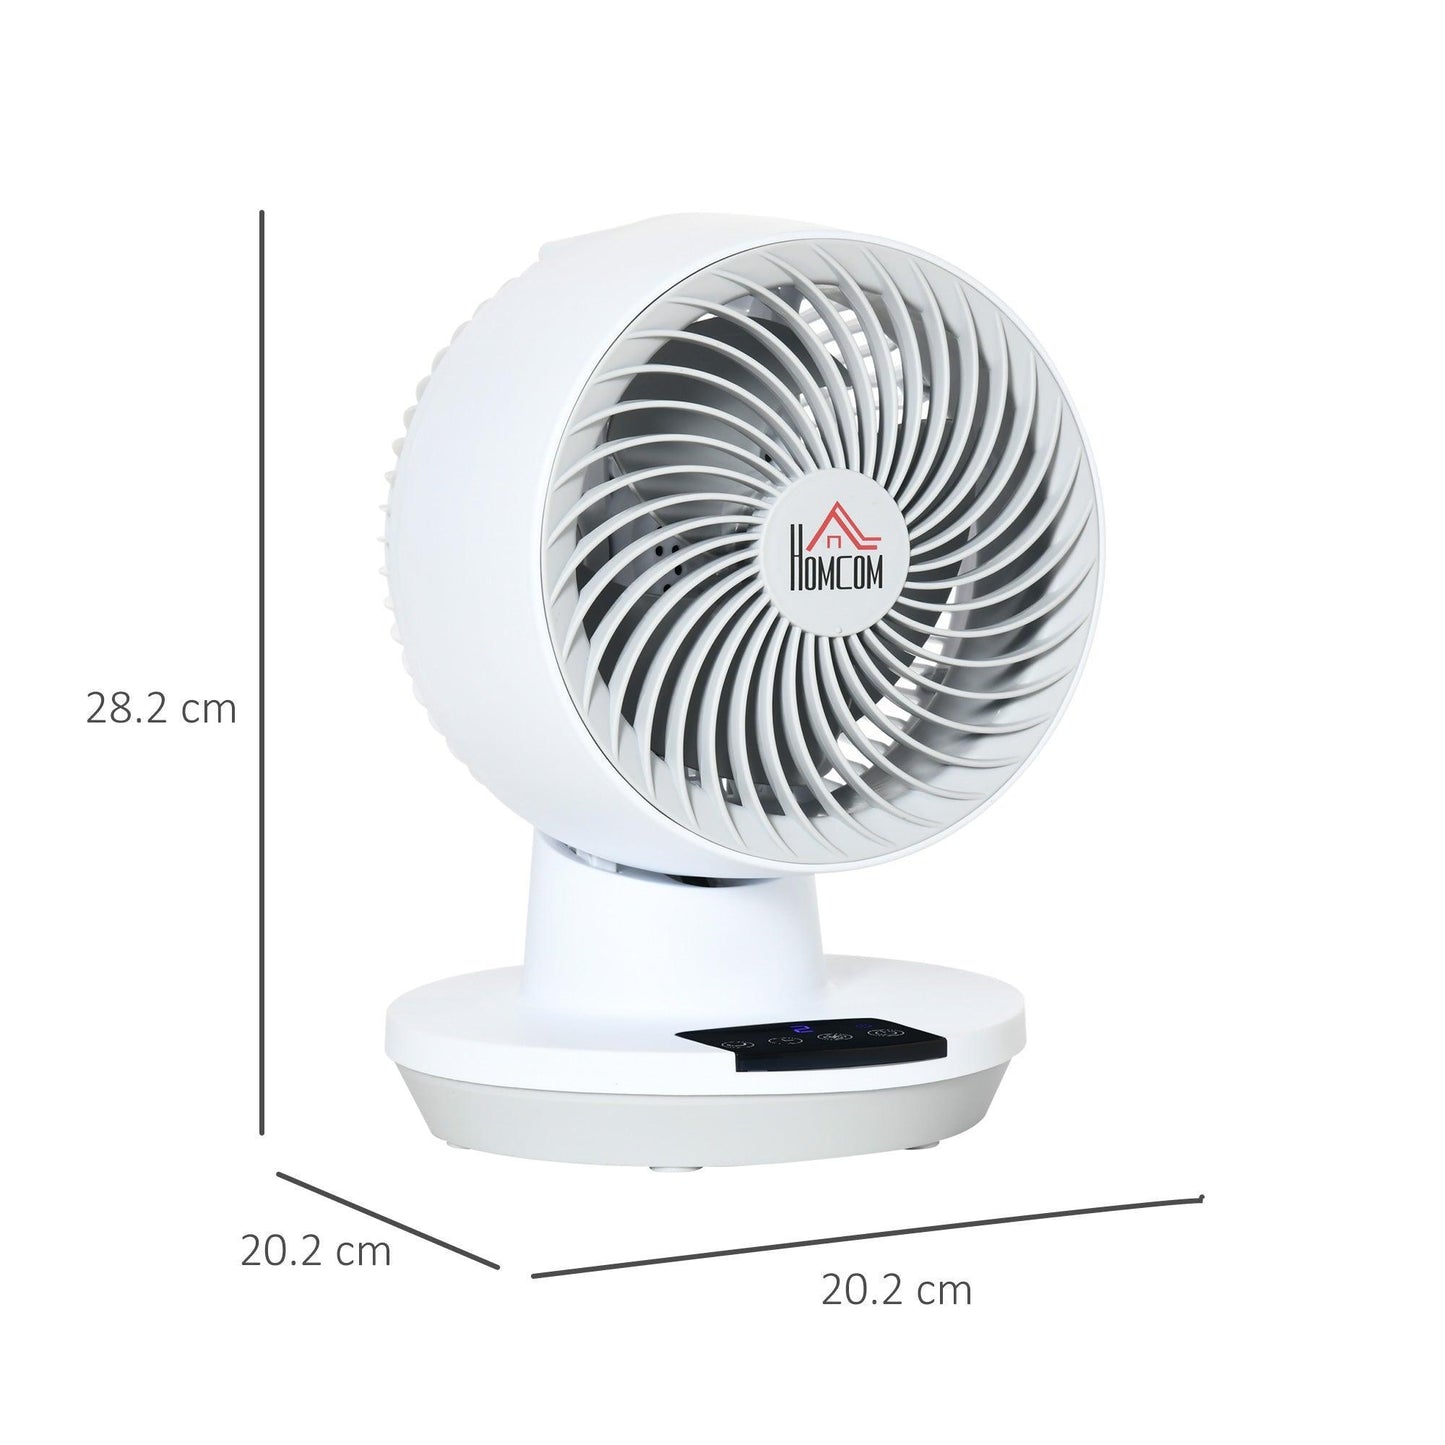 HOMCOM 28cm Desk Fan: 3 Speed, Remote, Portable Cooling, White - ALL4U RETAILER LTD